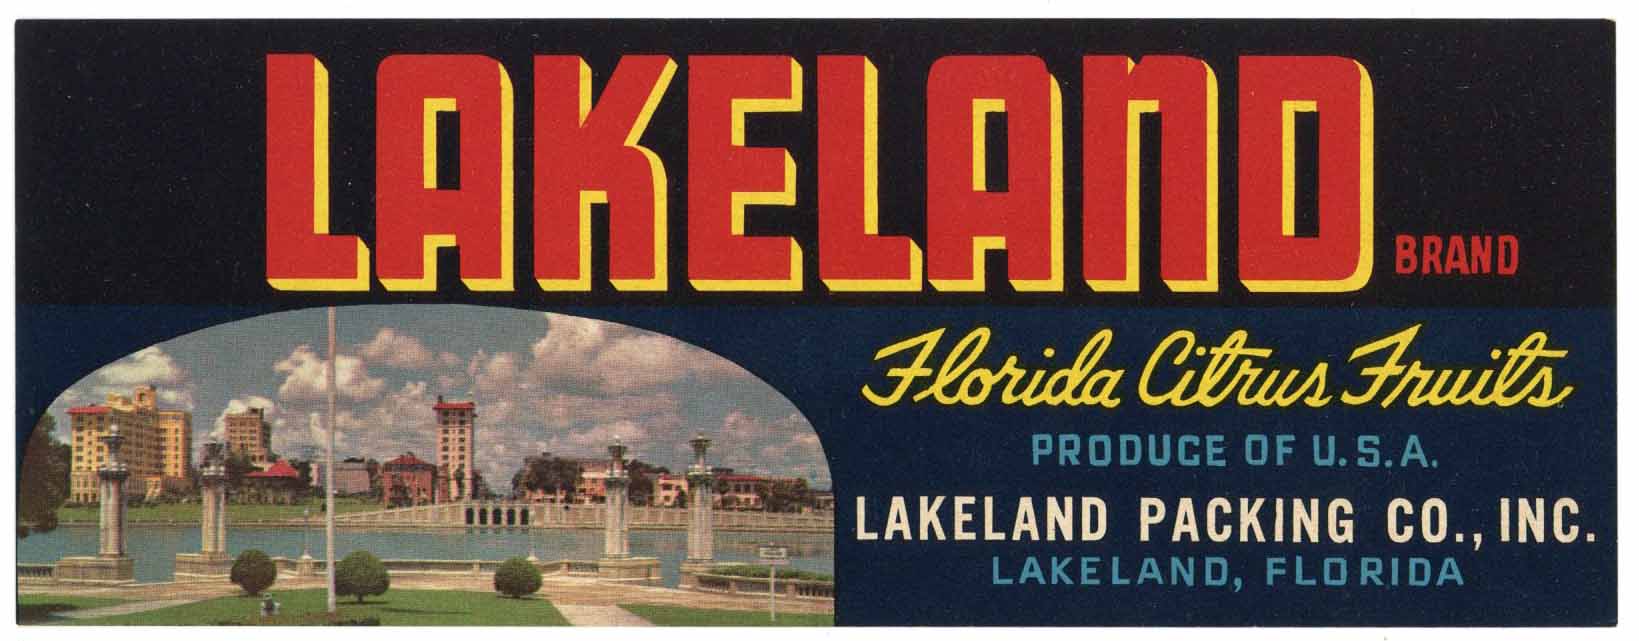 Lakeland Brand Vintage Lakeland Florida Citrus Crate Label